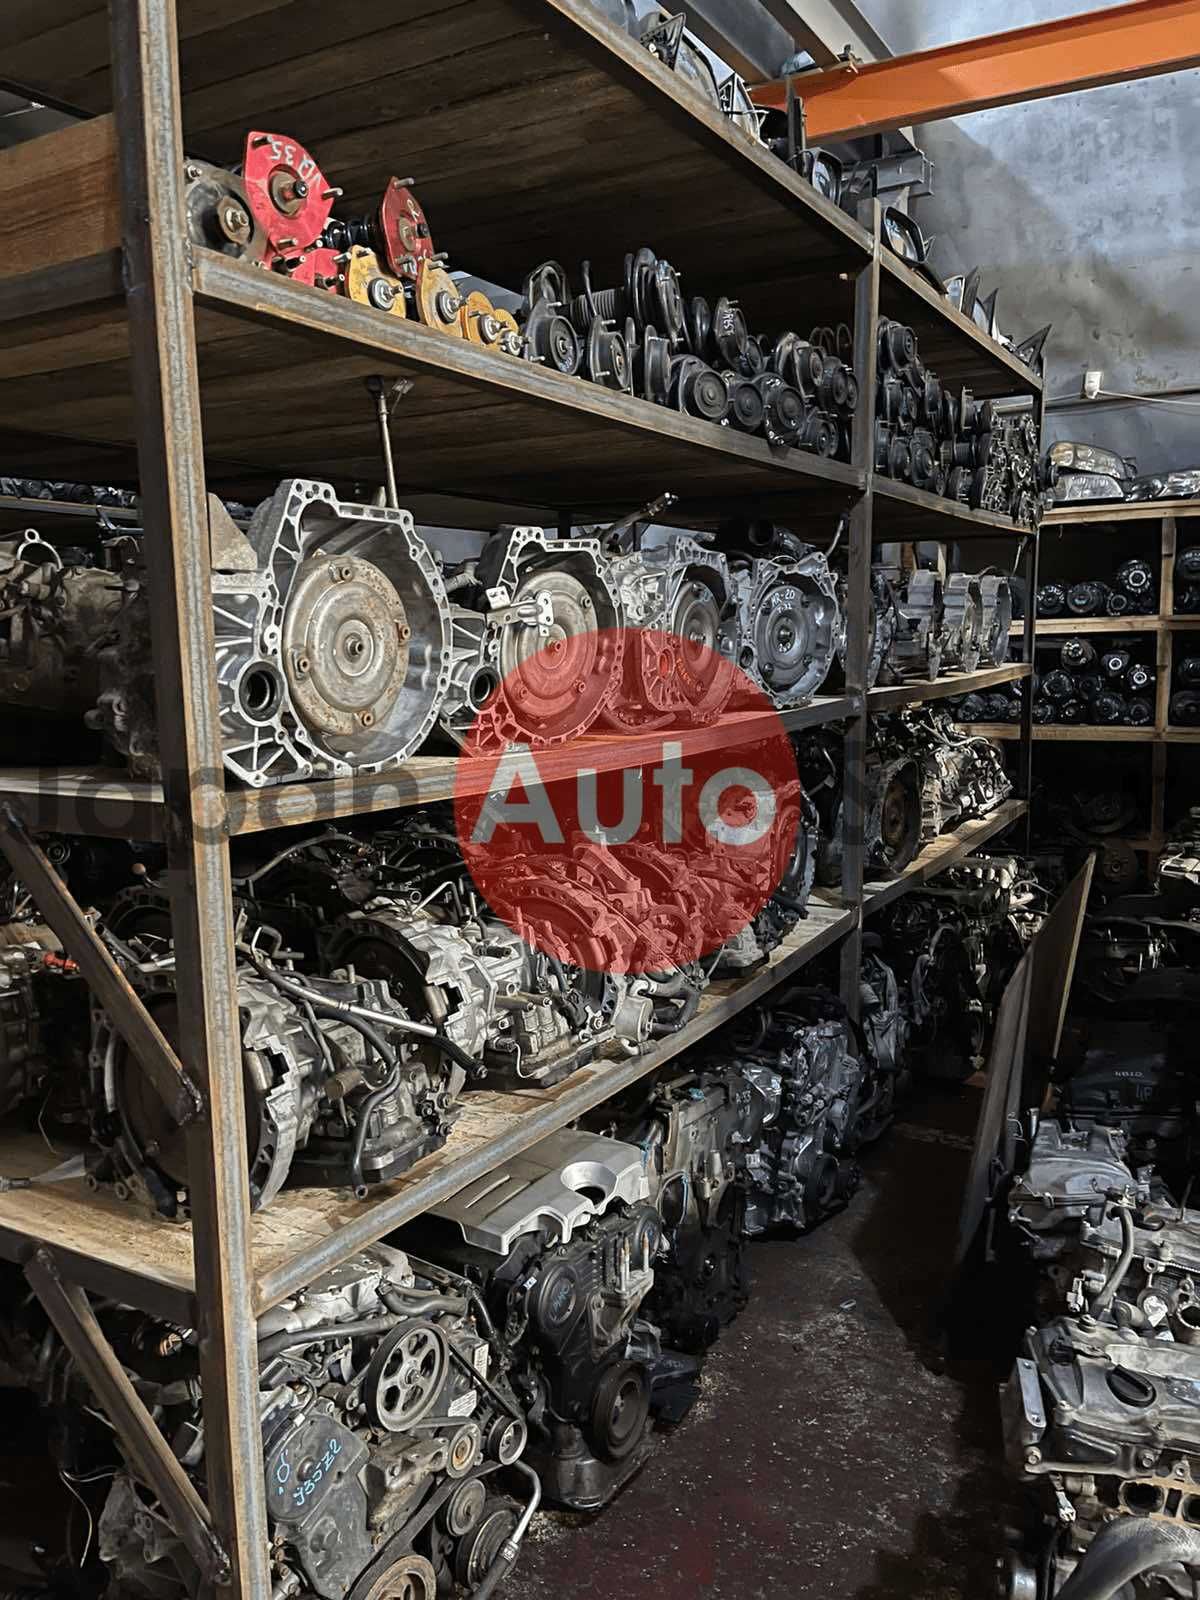 Двигатель Mitsubishi Outlander, ASX 4WD 4j12, объём 2.4, год 2013-2020